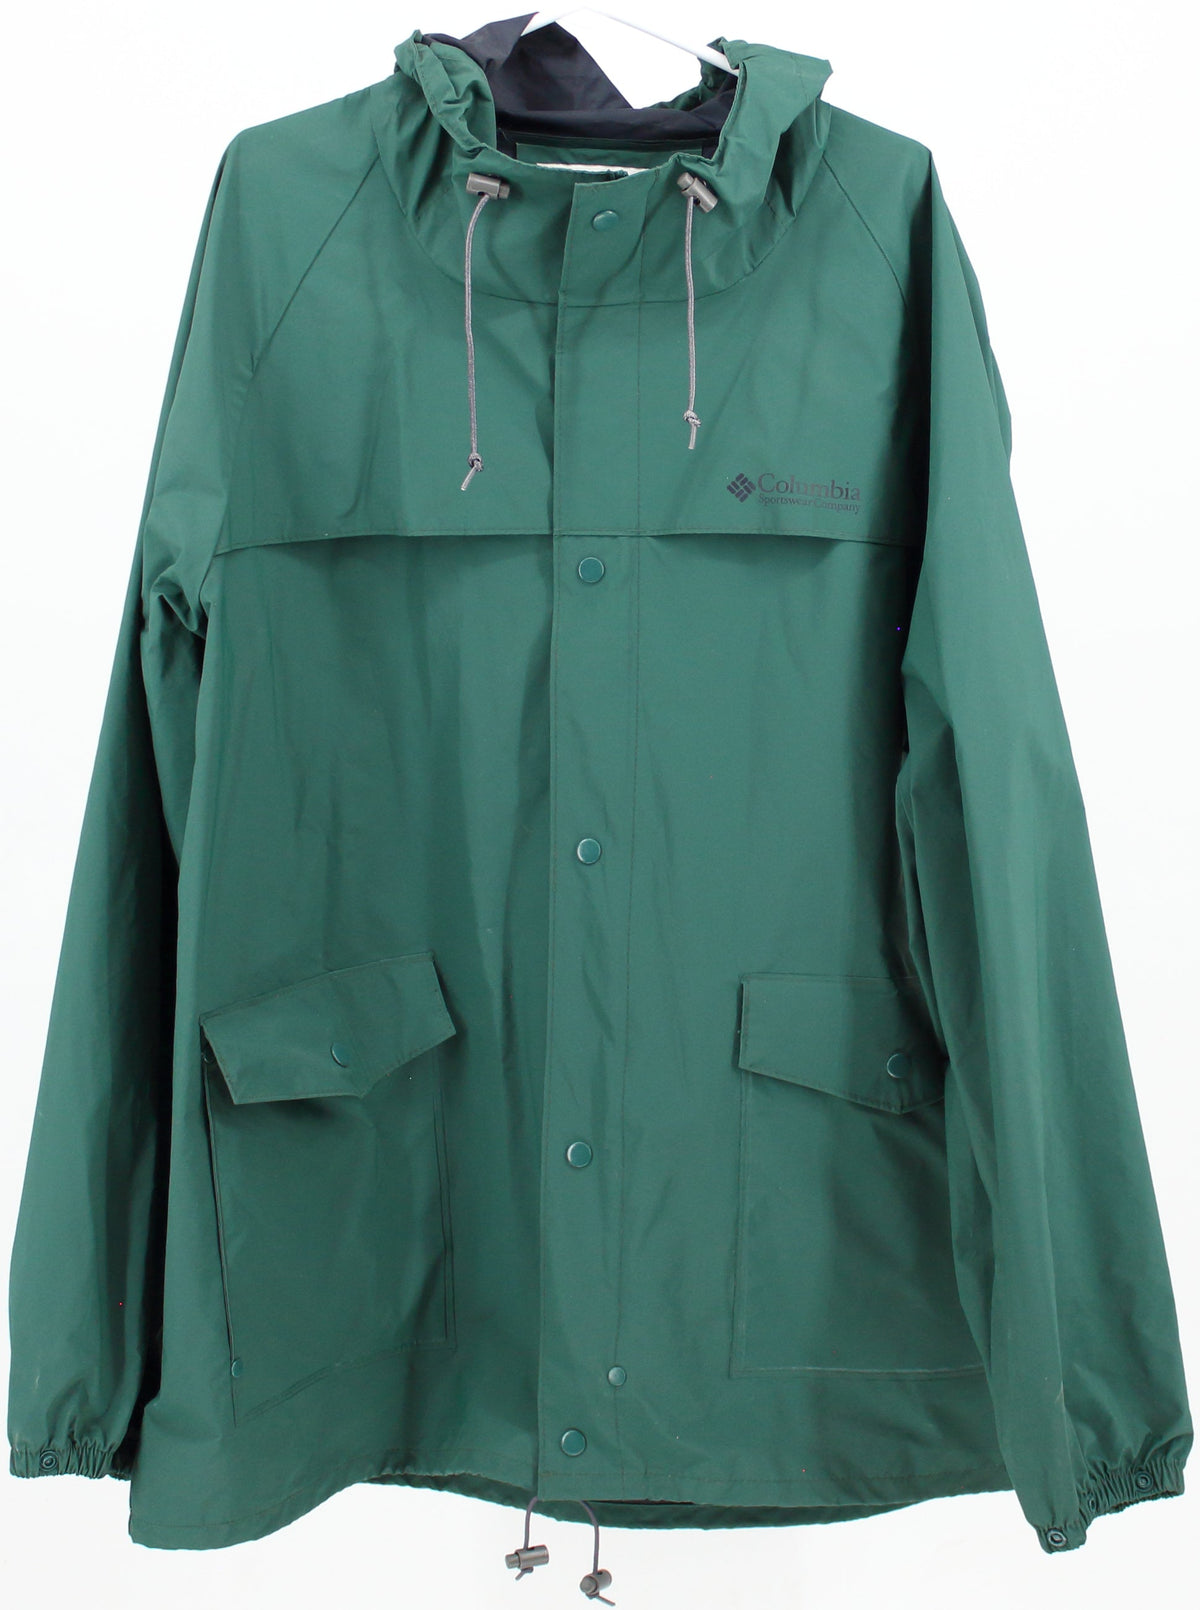 Columbia Green Rain Jacket